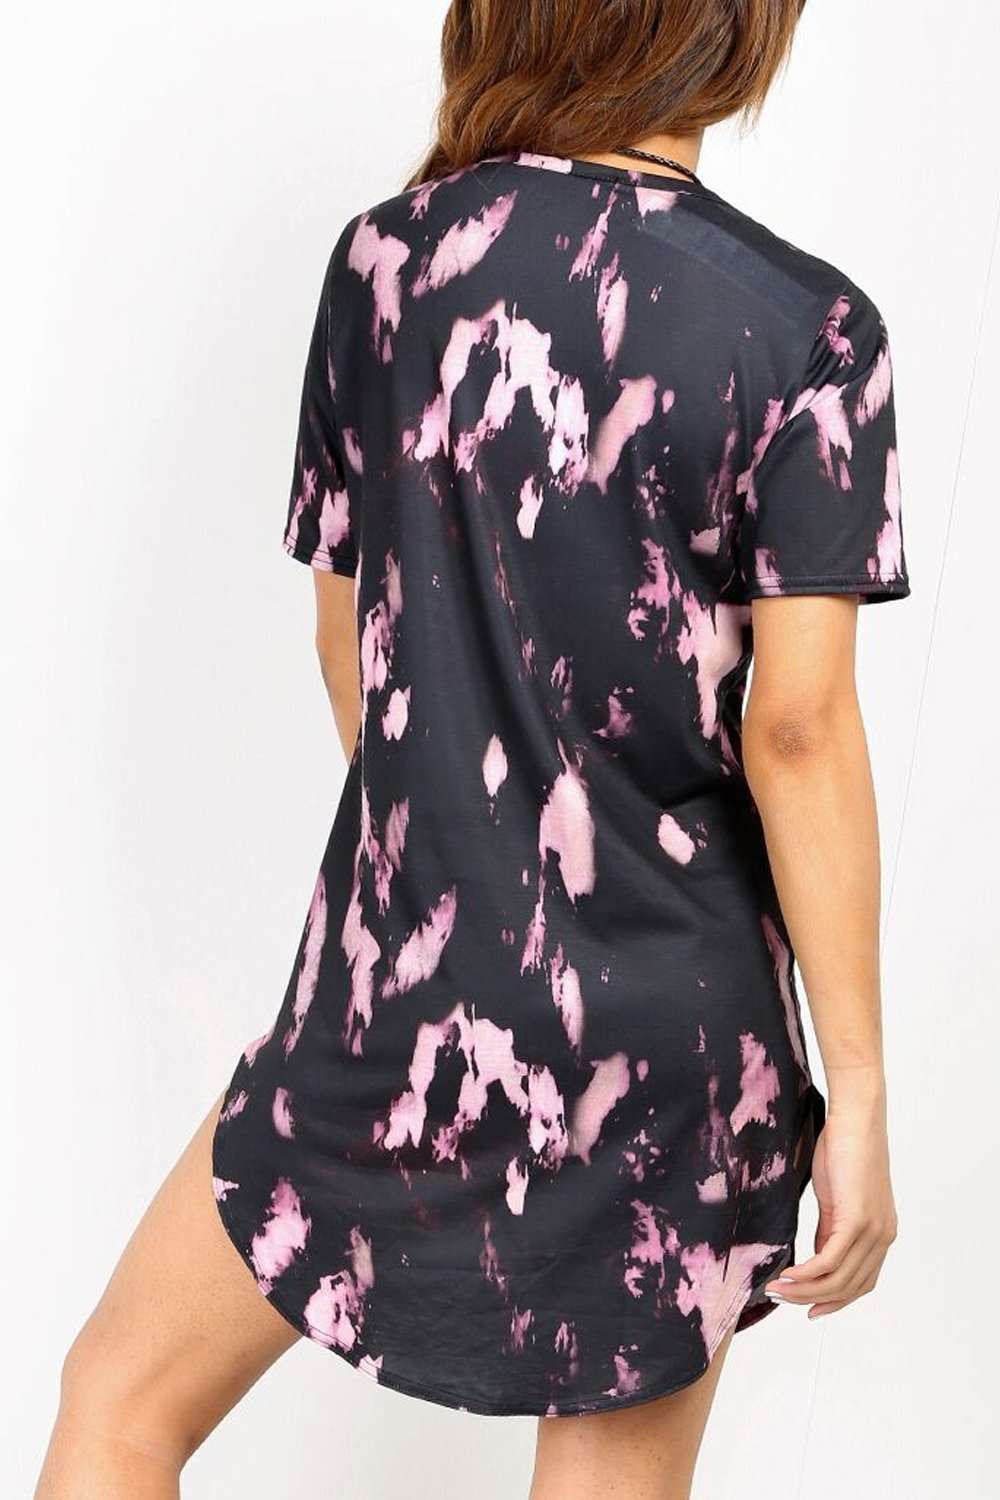 Fraizer Choker Neck Graphic Print Tshirt Dress - bejealous-com